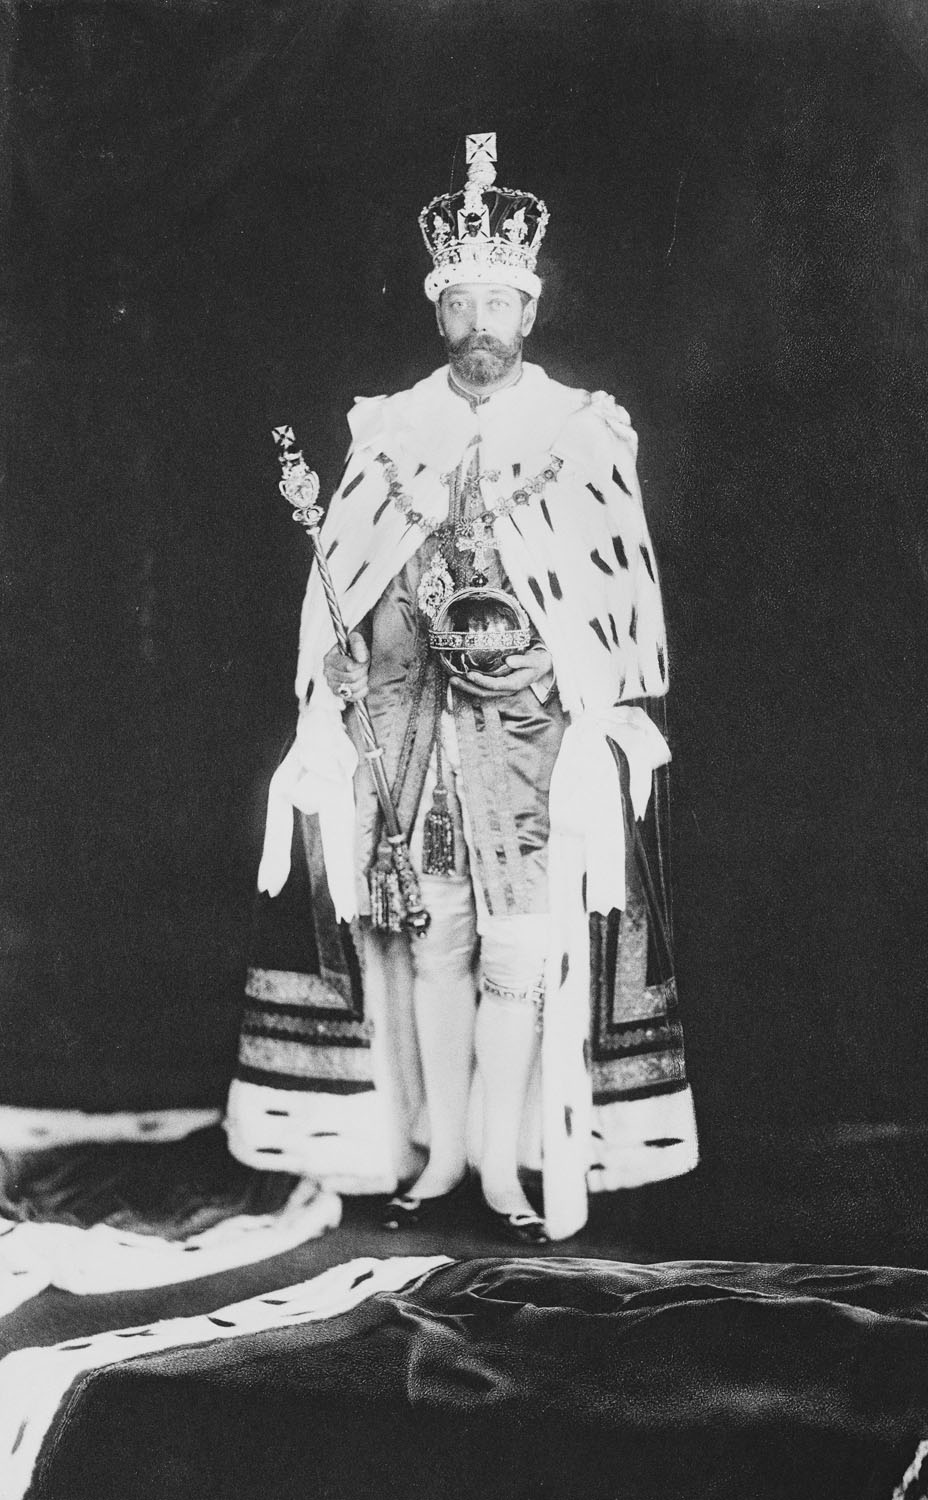 Photograph of King George V at his coronation